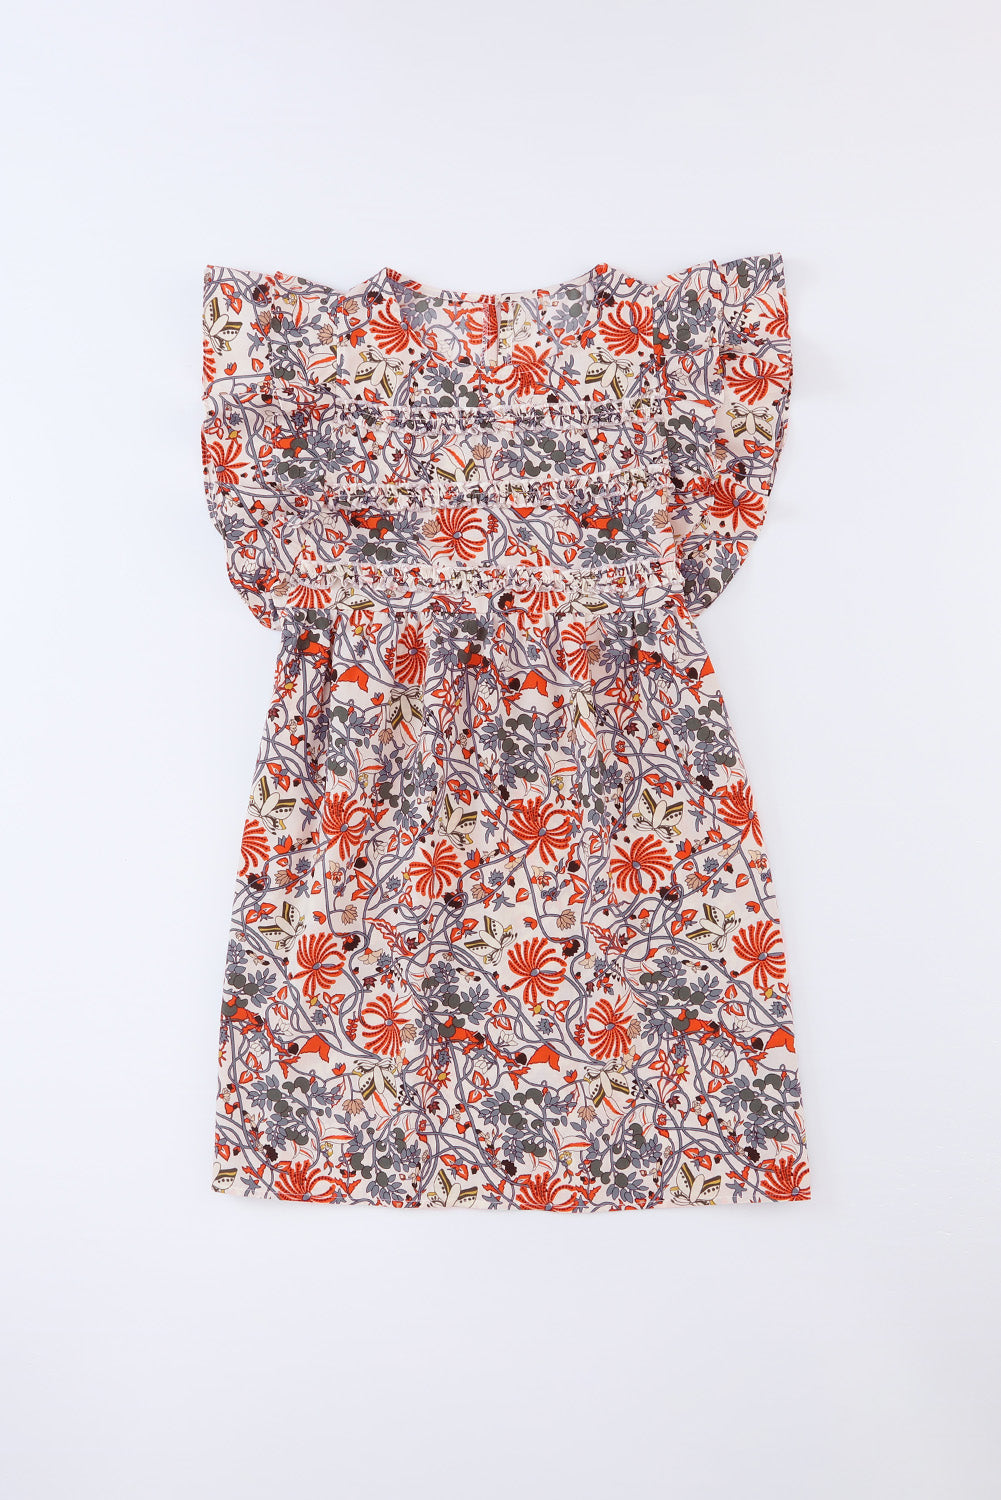 Floral Sundress with Ruffled Sleeves| Short Boho Summer Dress.